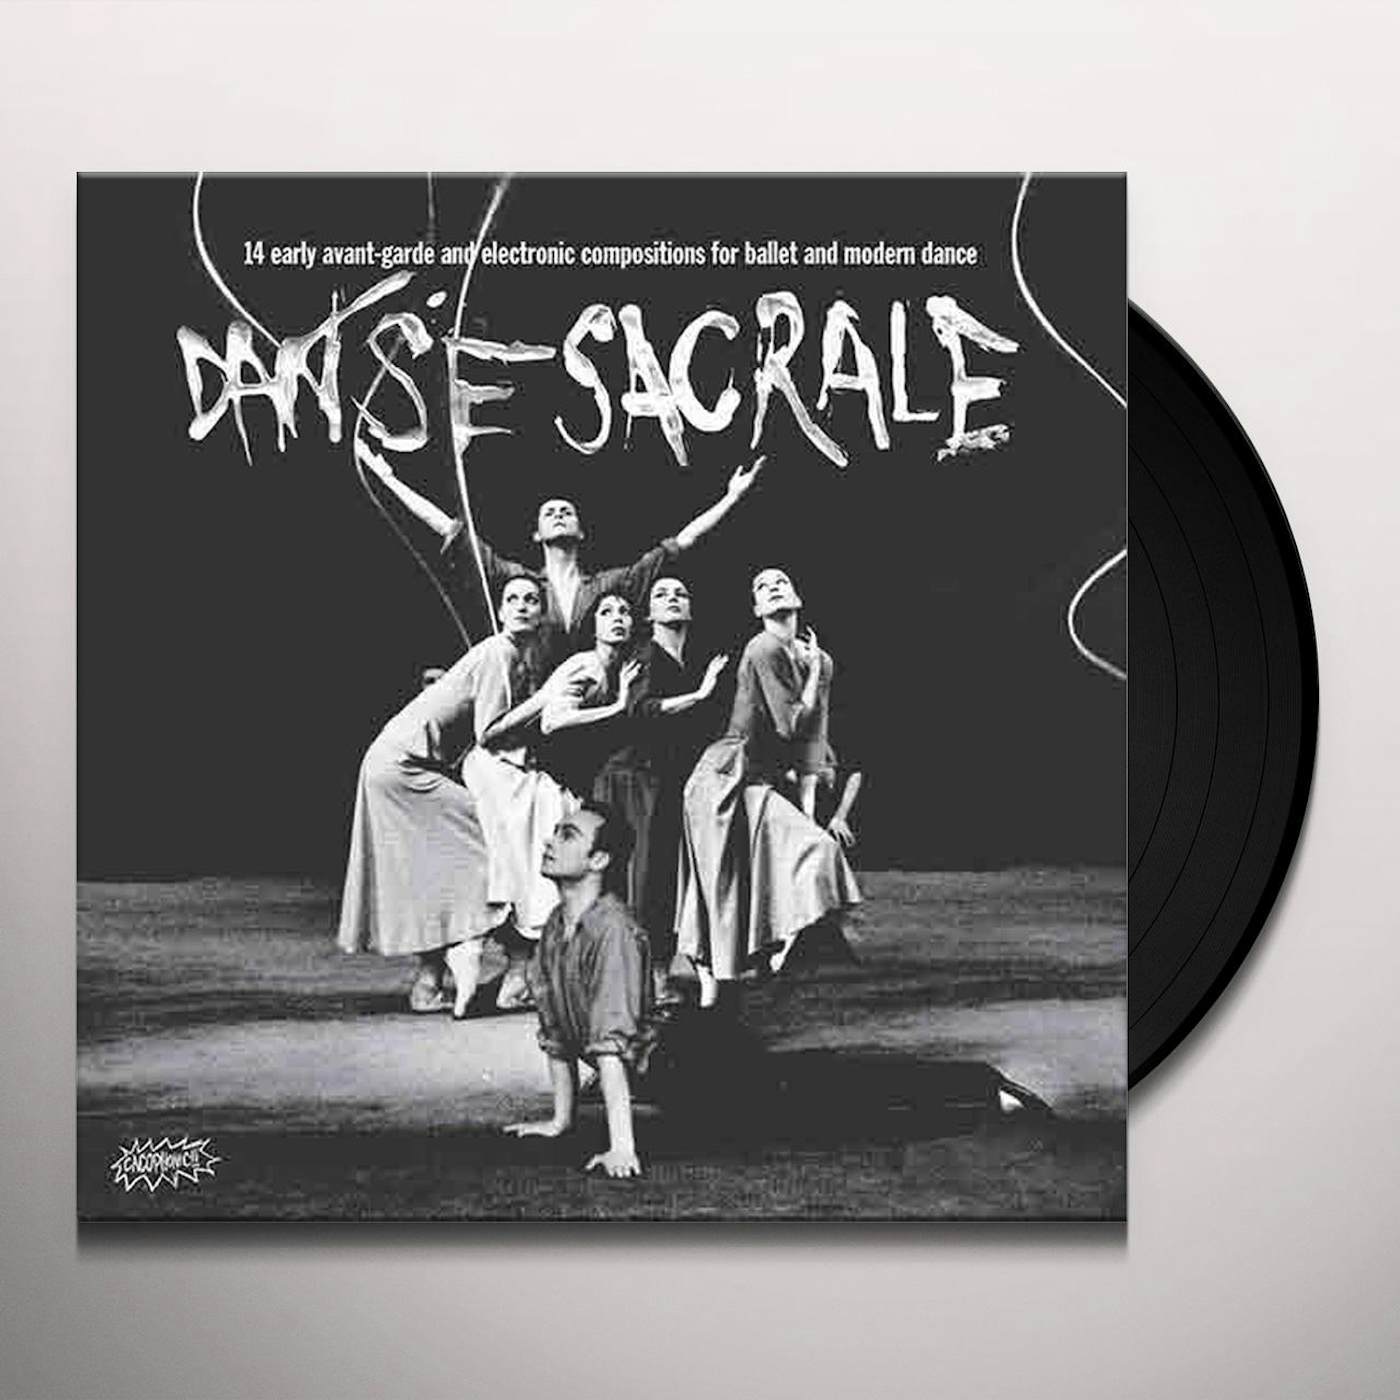 DANSE SACRALE: 14 EARLY AVANT-GARDE & ELECT / VAR Vinyl Record